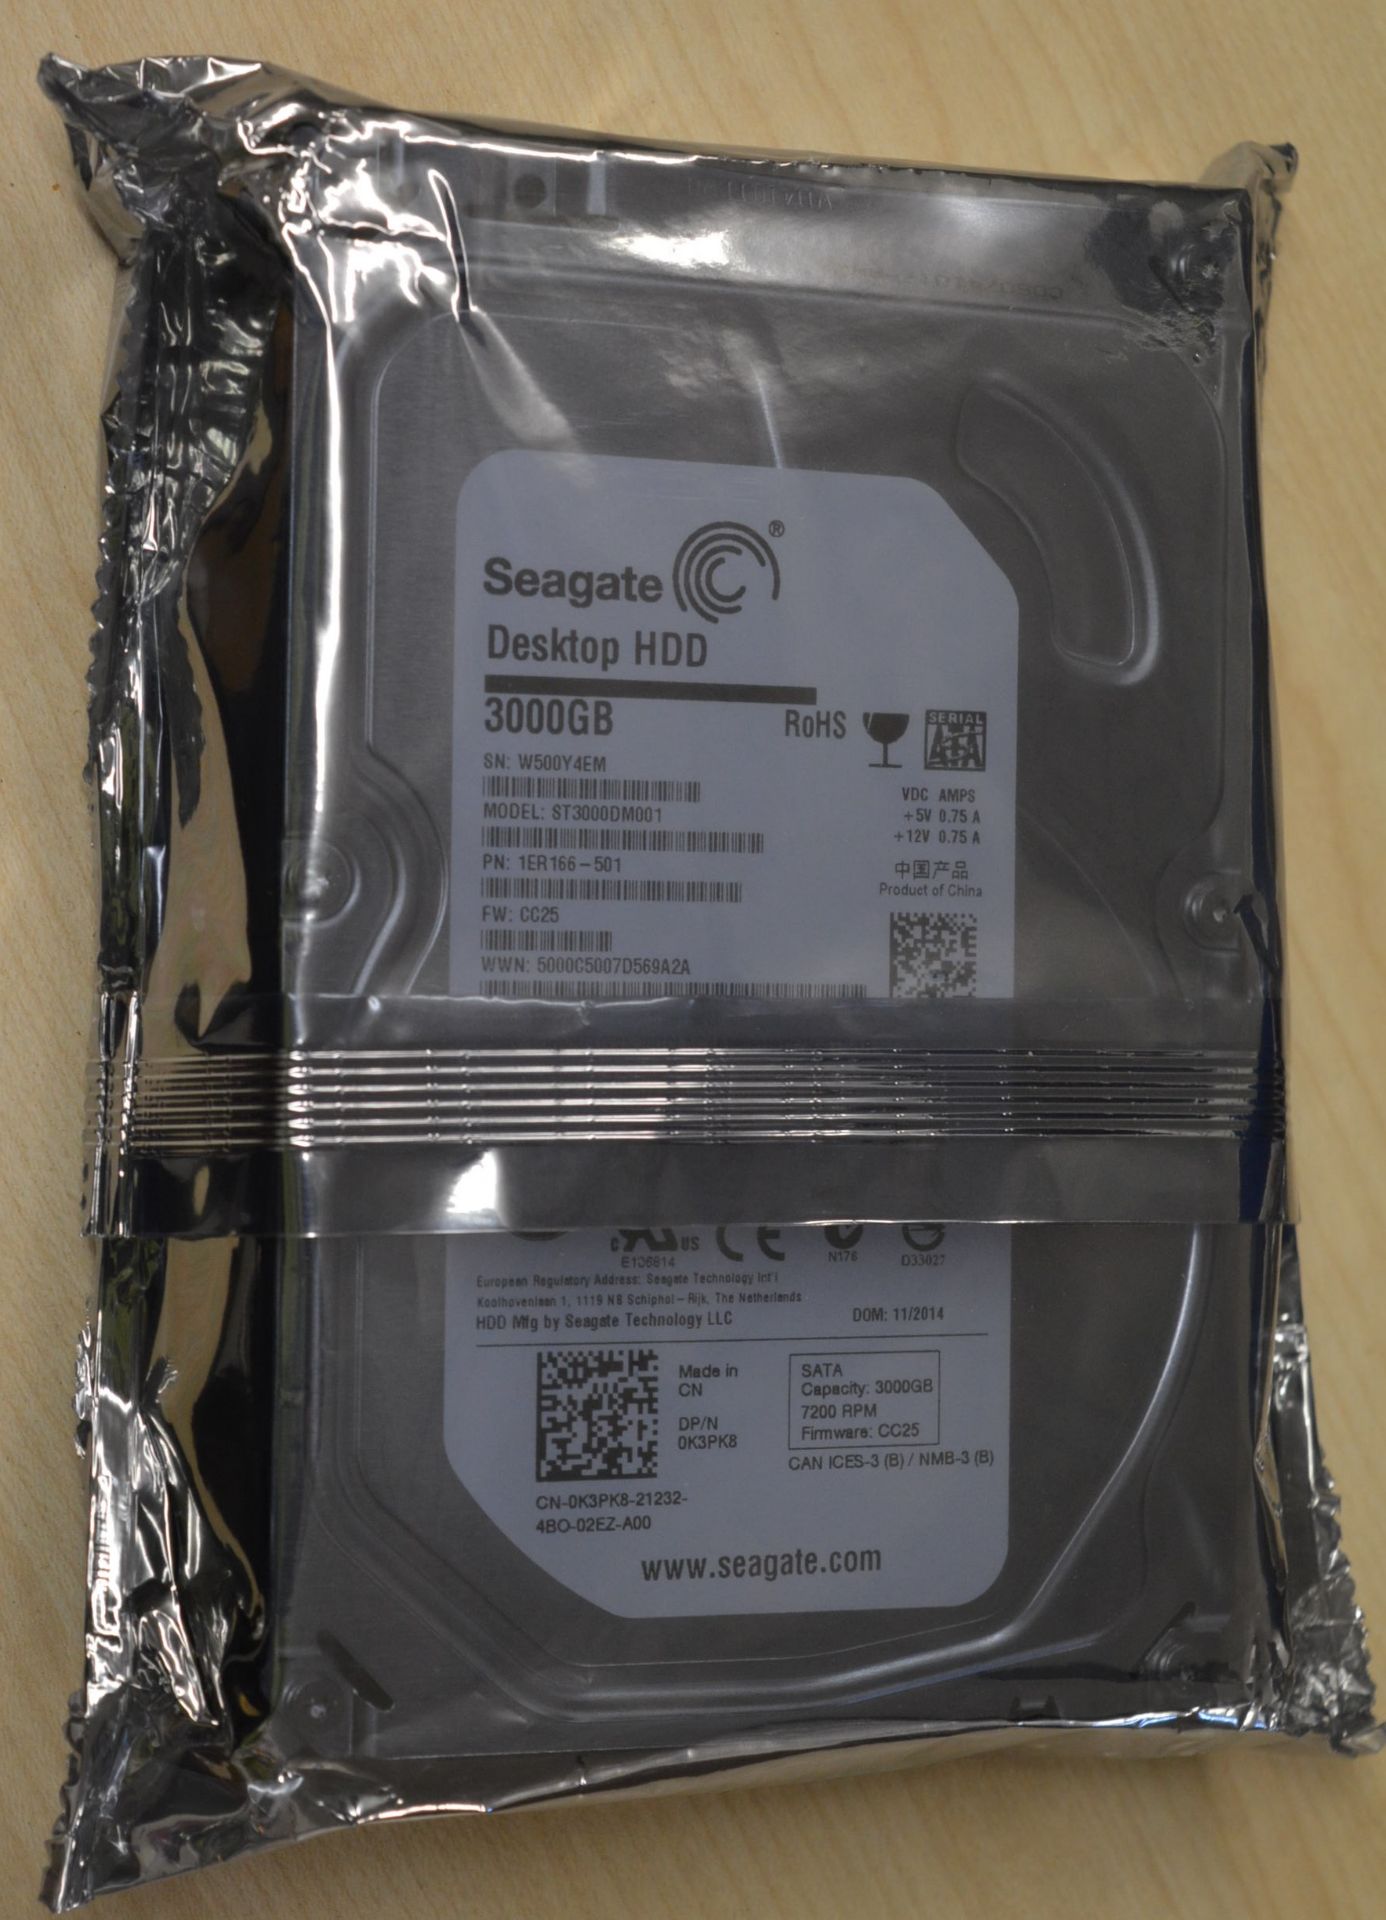 1 x Seagate 3TB 3.5 Inch Desktop Hard Drive - 64mb Cache, 7200rpm, SATA-III - Sealed in Original